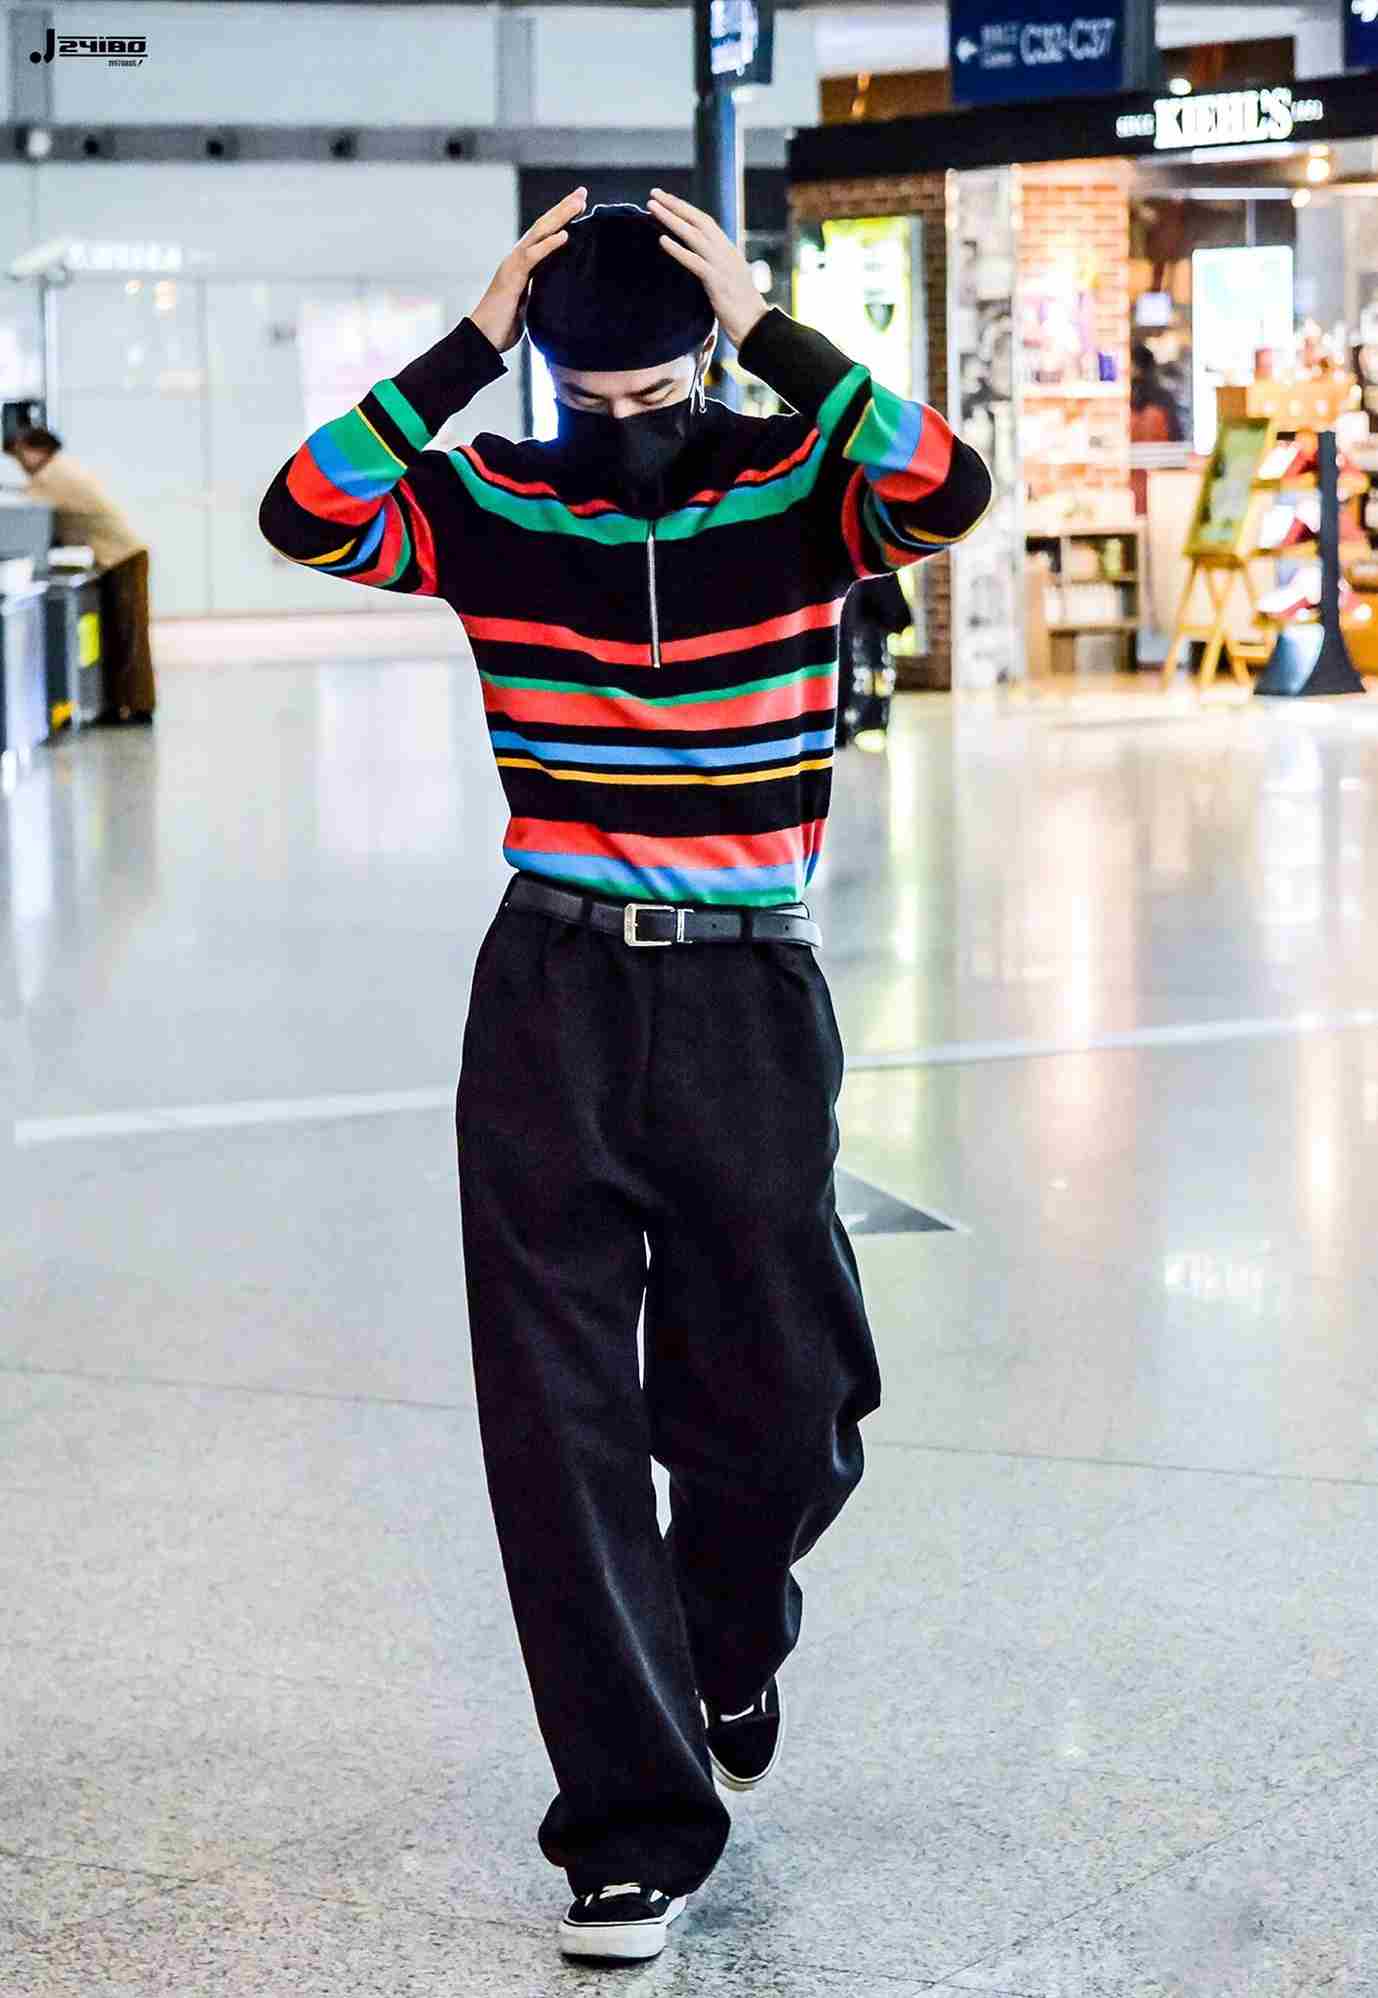 GOT7 Jackson Inspired Striped Half-Zip Sweater